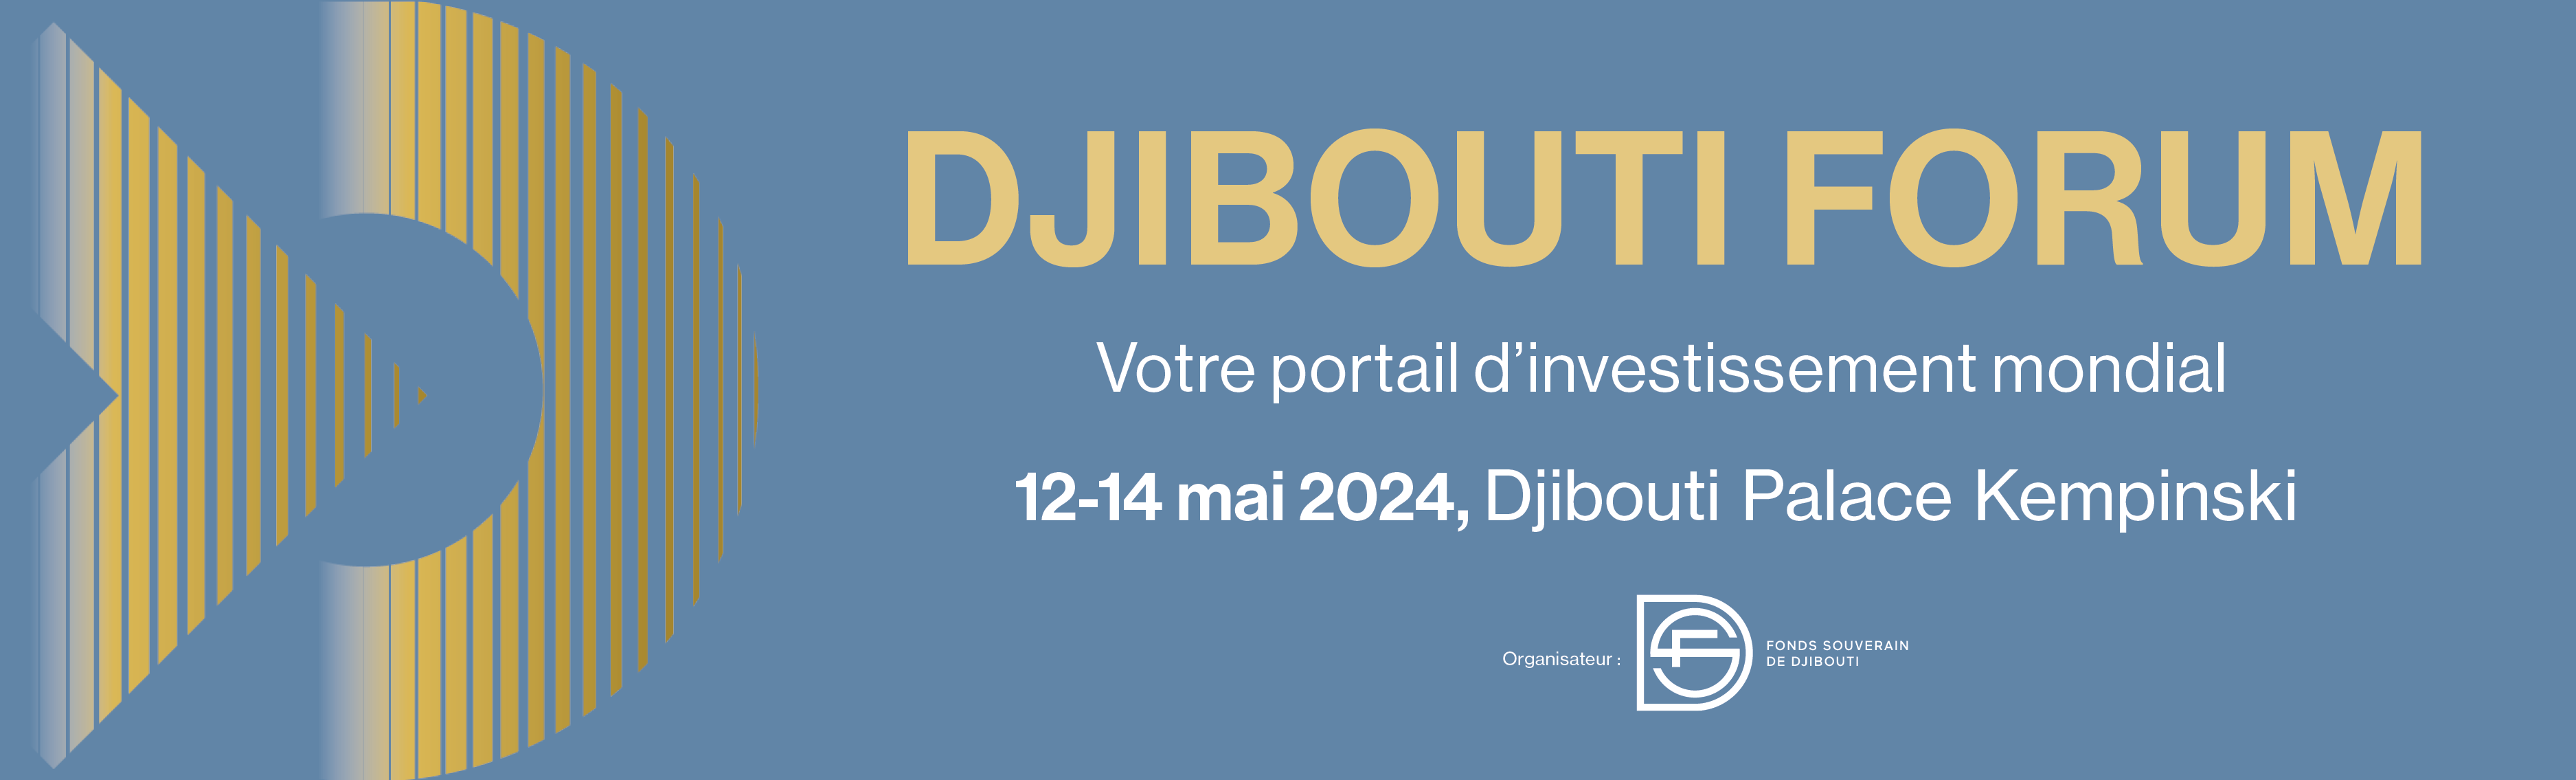 Fonds souverain de Djibouti, Djibouti Forum, Gateway of Opportunities 